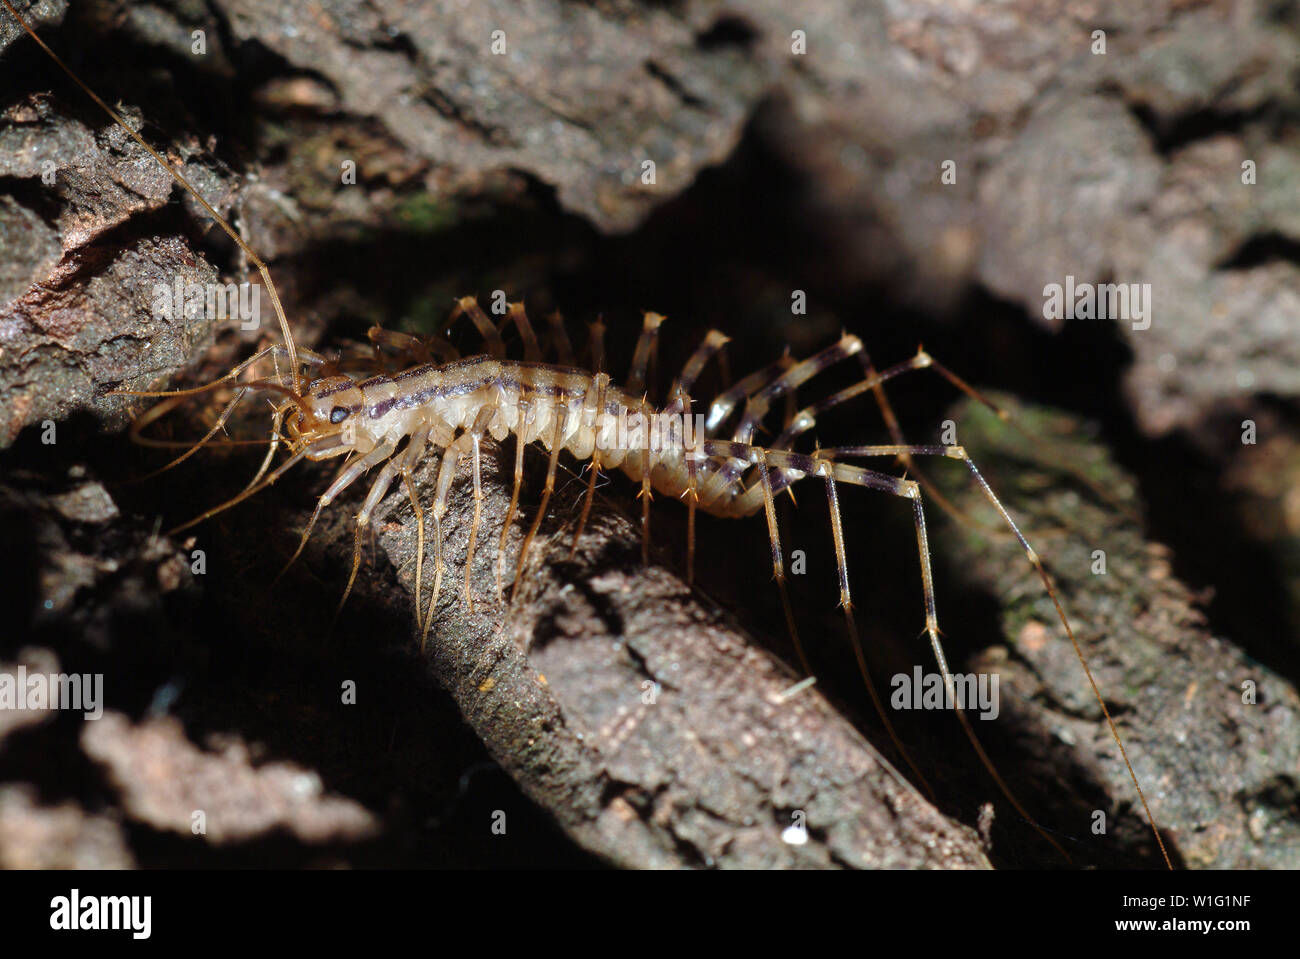 House centipede, La scutigera, Spinnenläufer Foto Stock